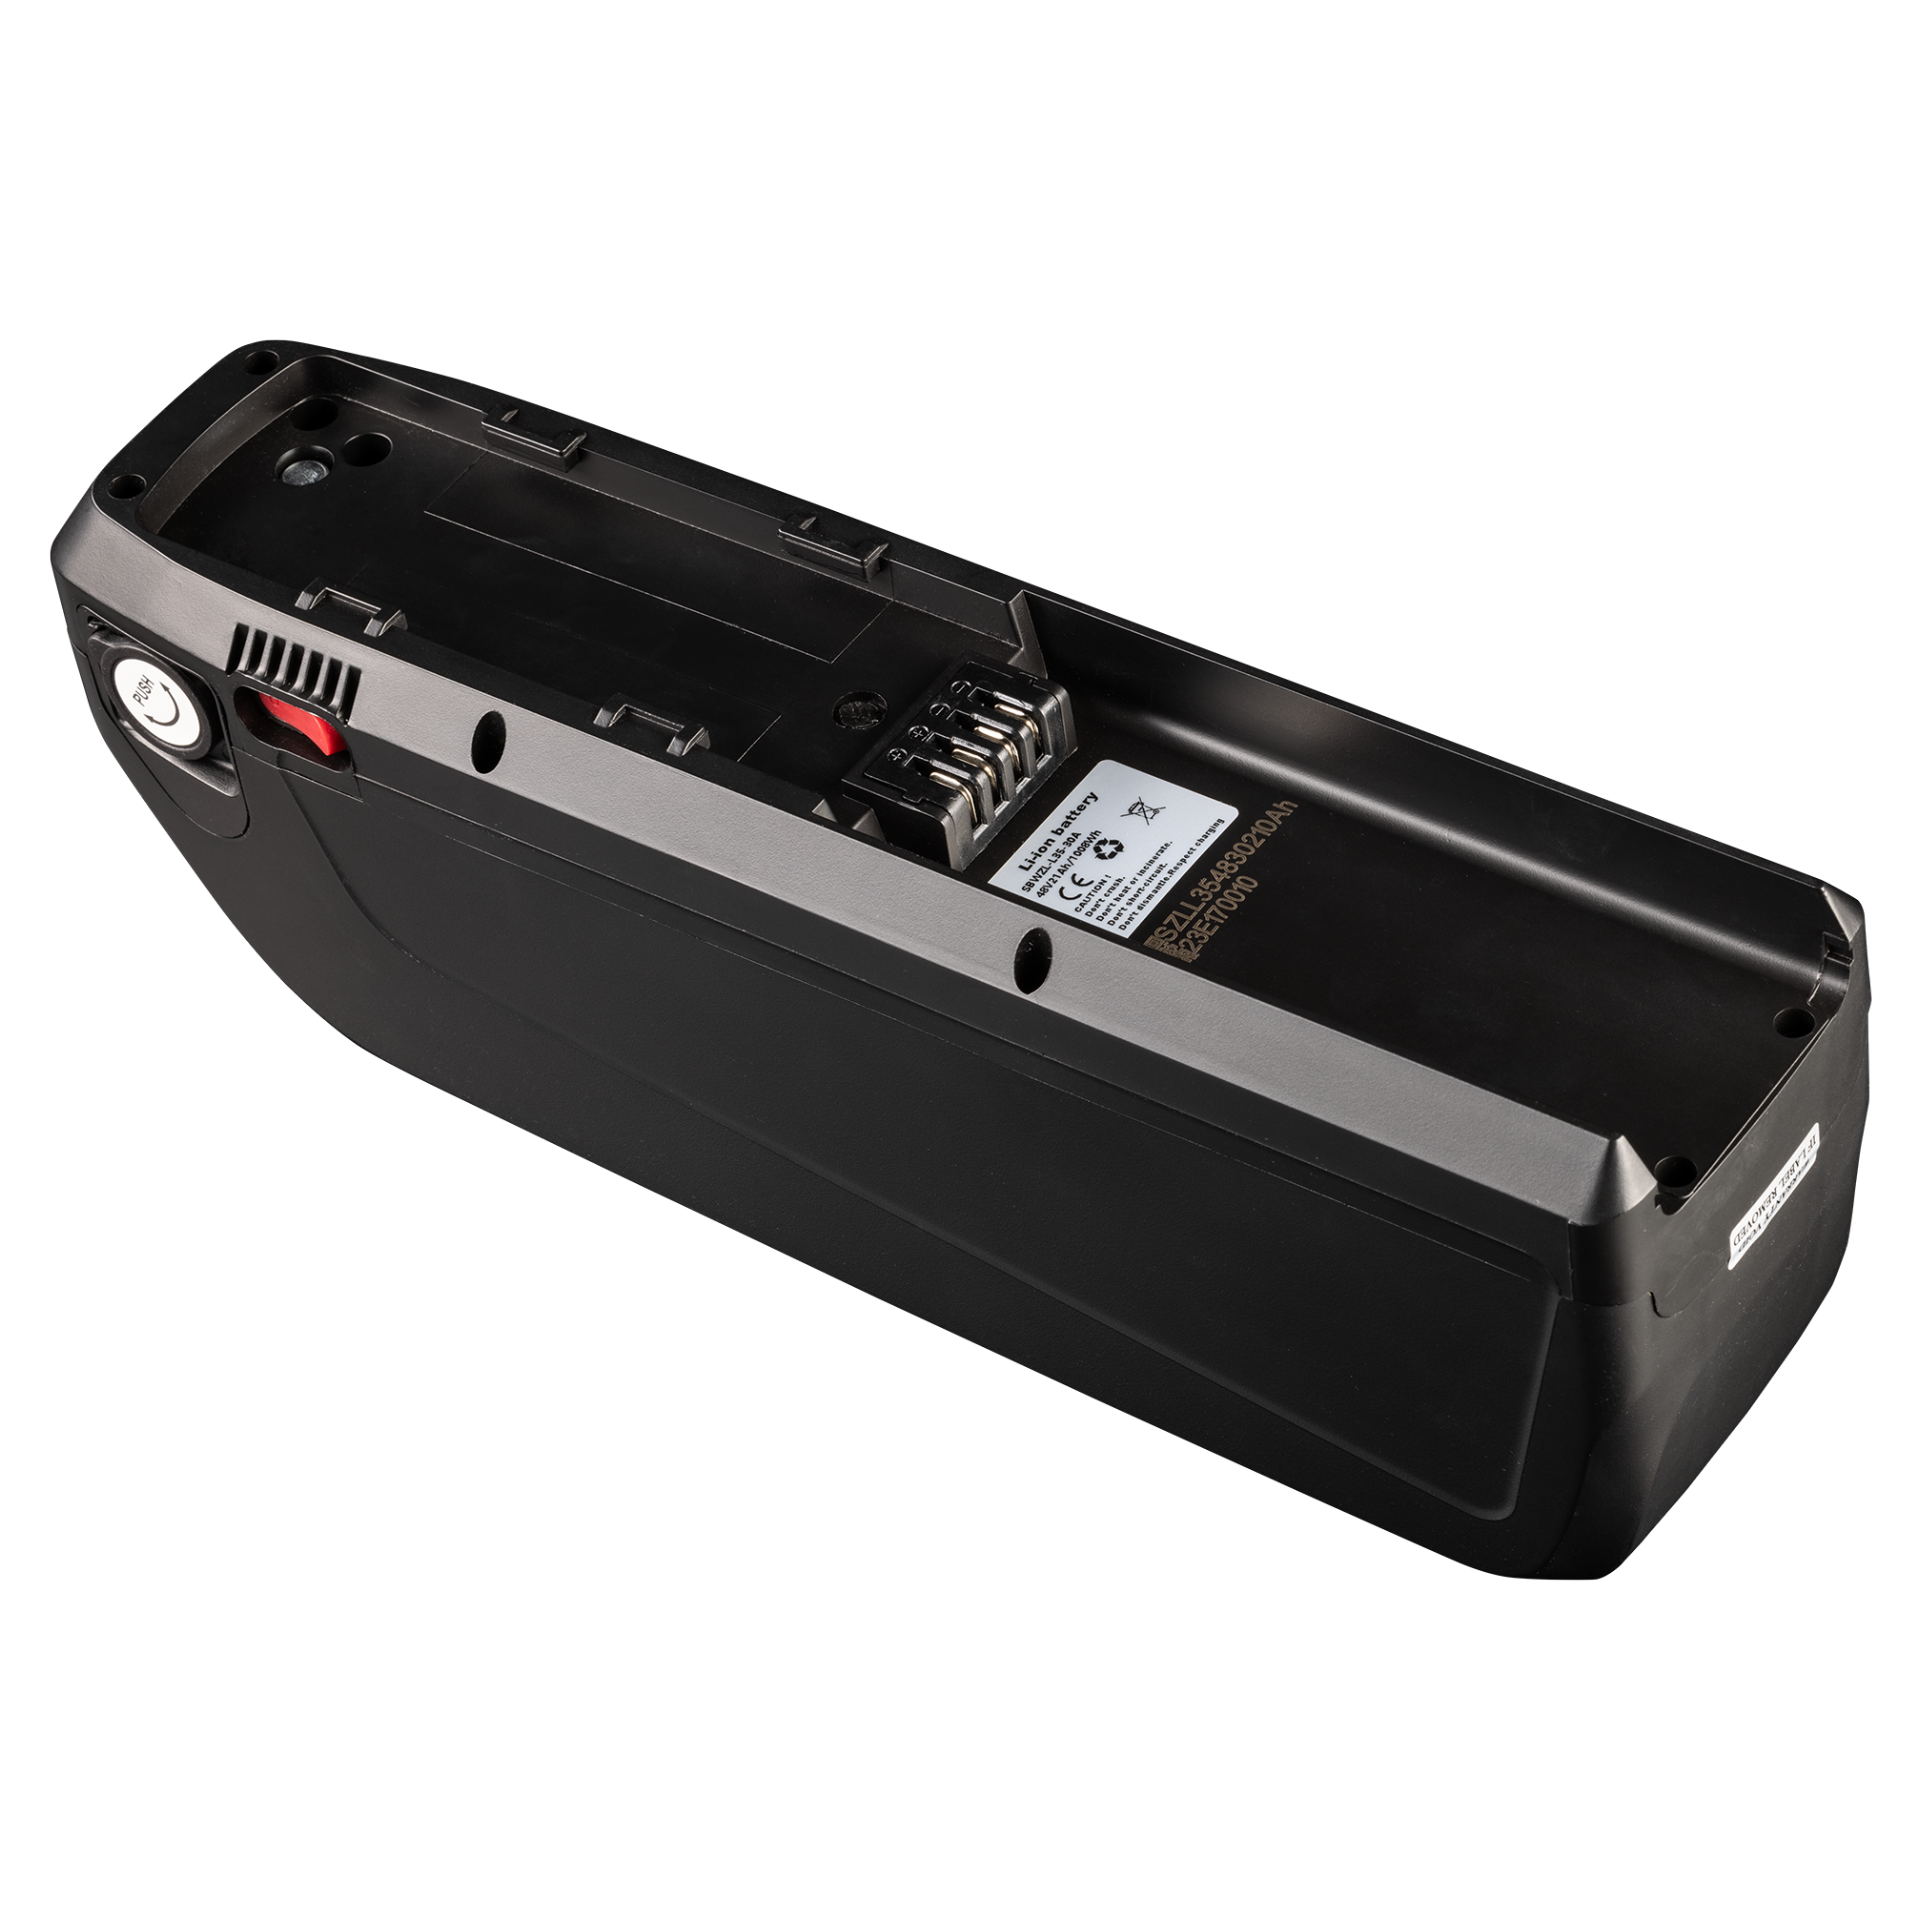 Pedibal E Cruiza LG 12.8 Ah 614.4 Wh Lithium-Ion Battery